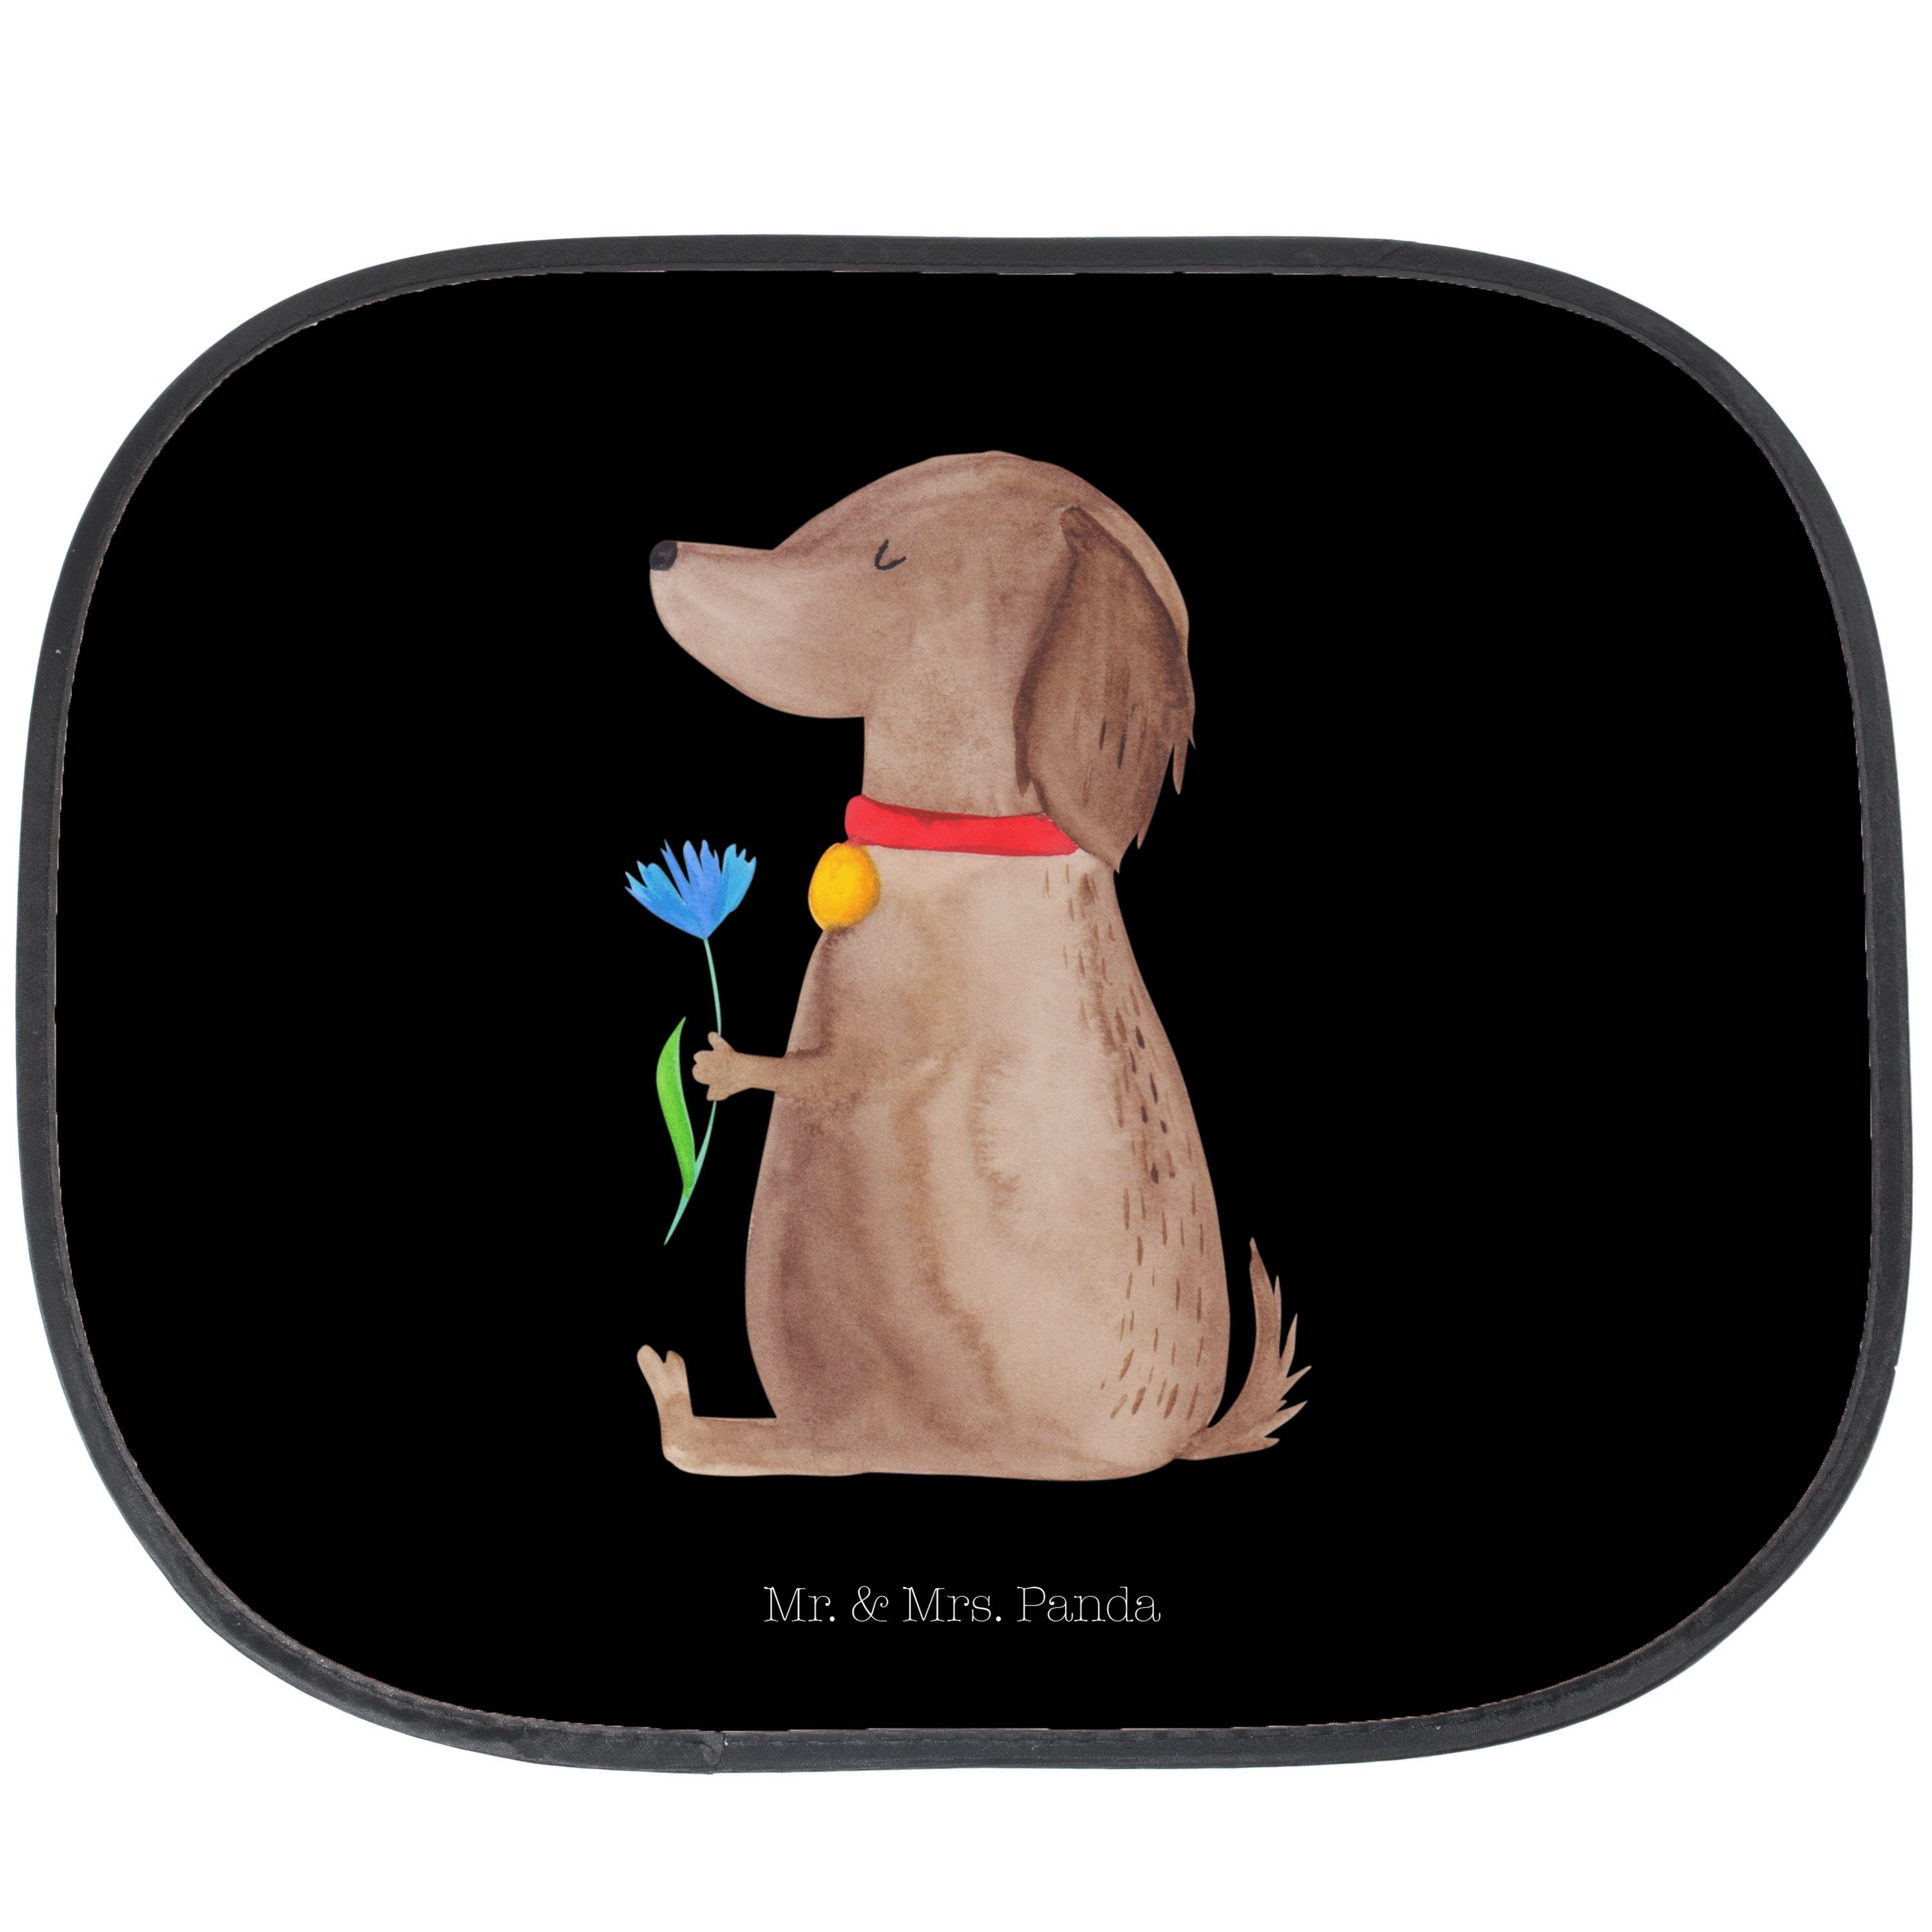 Sonnenschutz Hund Blume - Schwarz - Geschenk, Hunde, Sonnenblende, Frauchen, Hunde, Mr. & Mrs. Panda, Seidenmatt